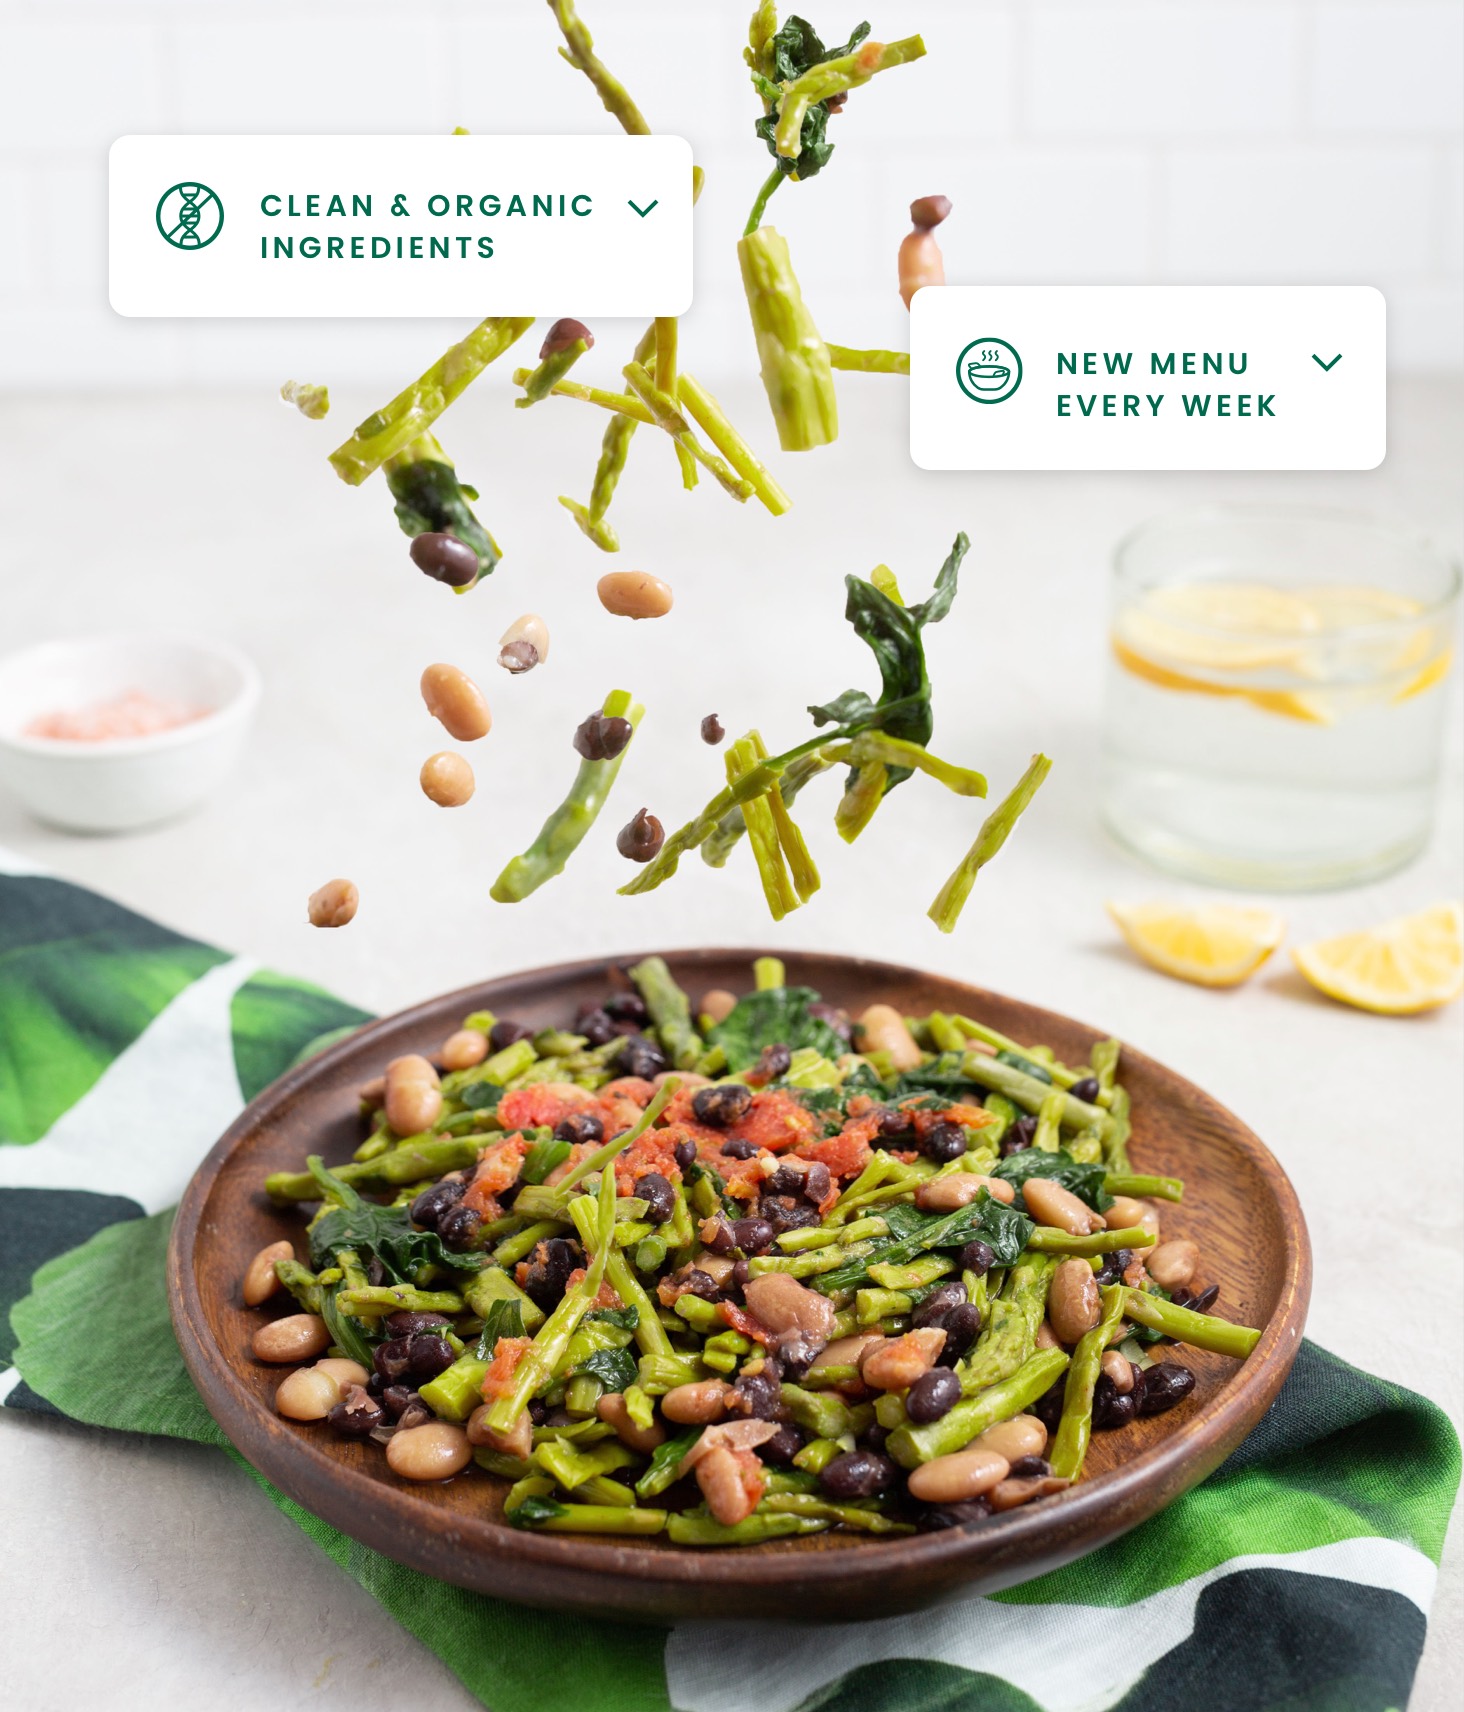 Asparagus vegan dish with beans